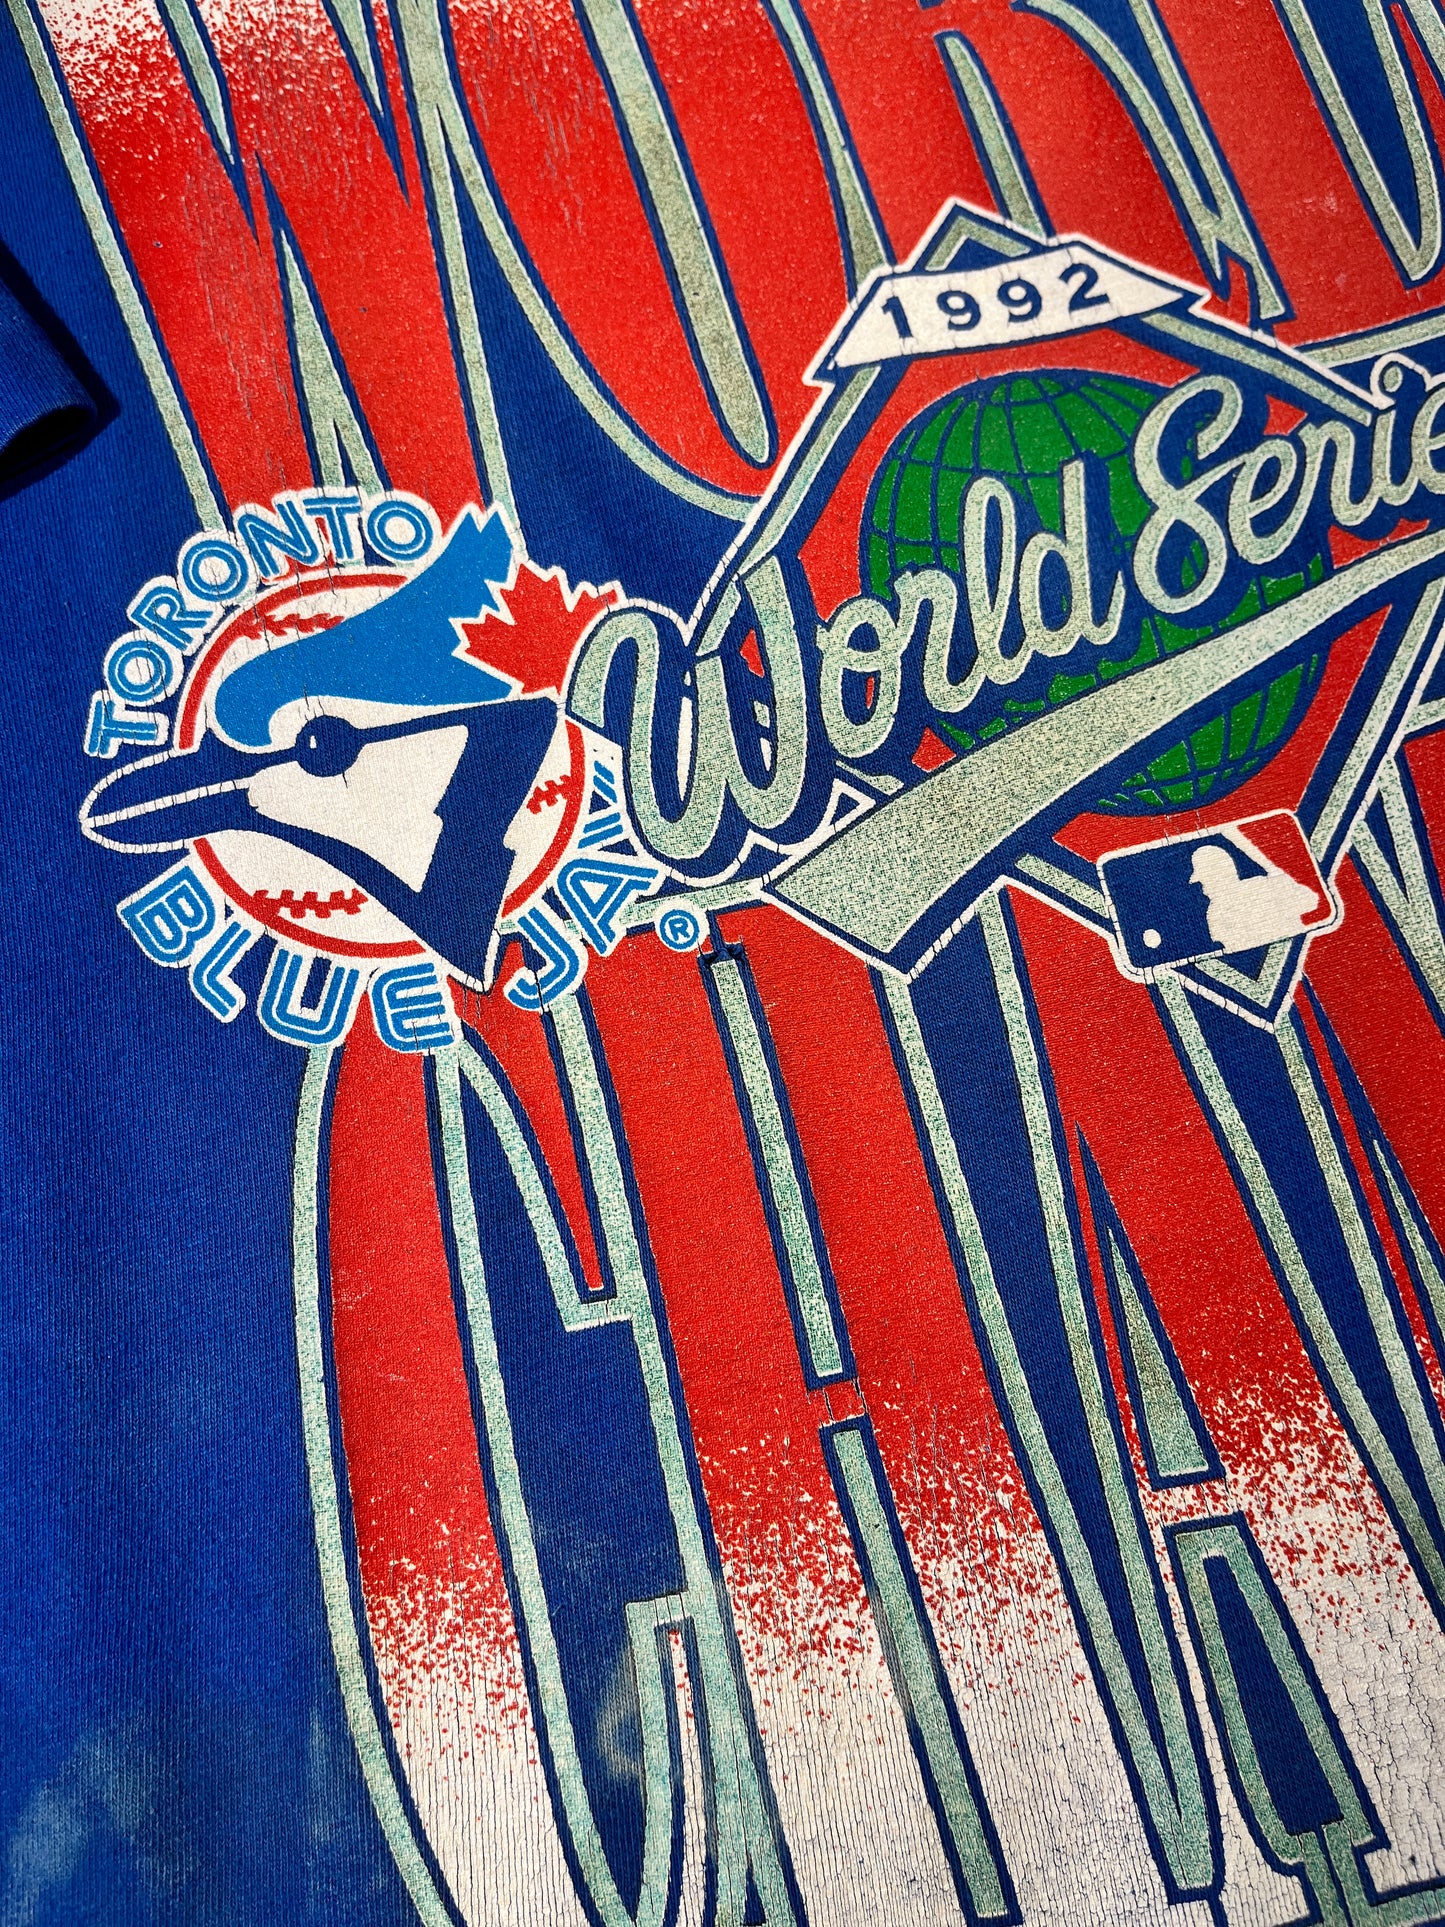 Vintage Toronto Blue Jays T-Shirt 1992 World Champs MLB USA Made Single Stitch